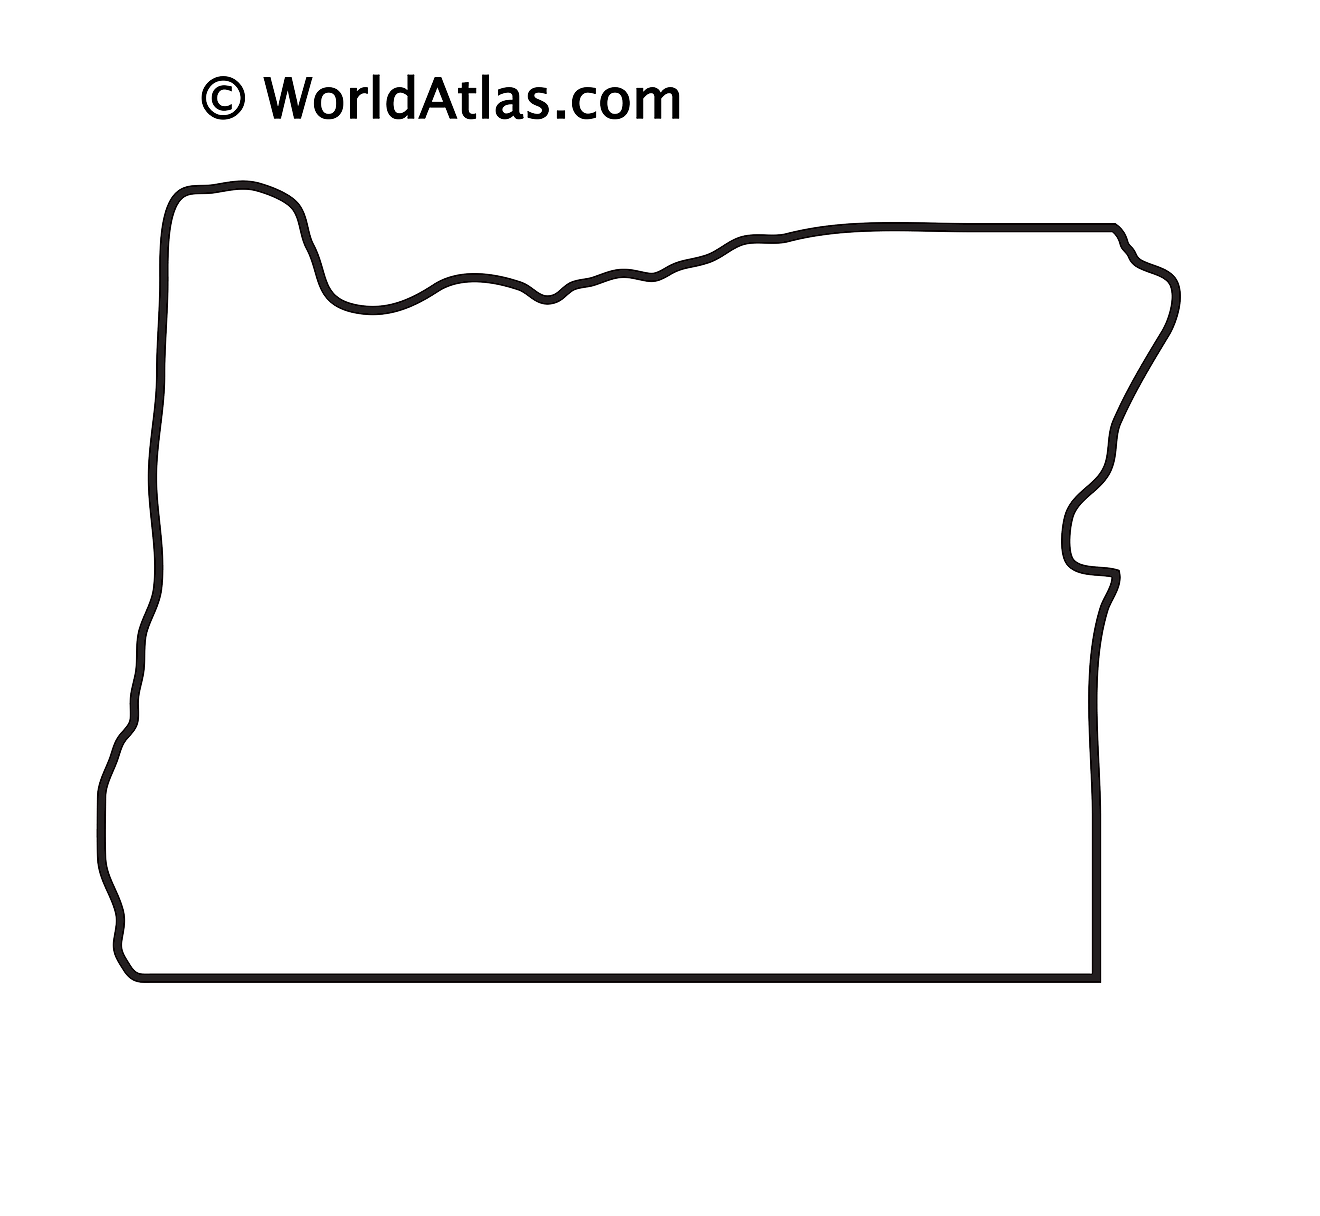 Blank Outline Map of Oregon